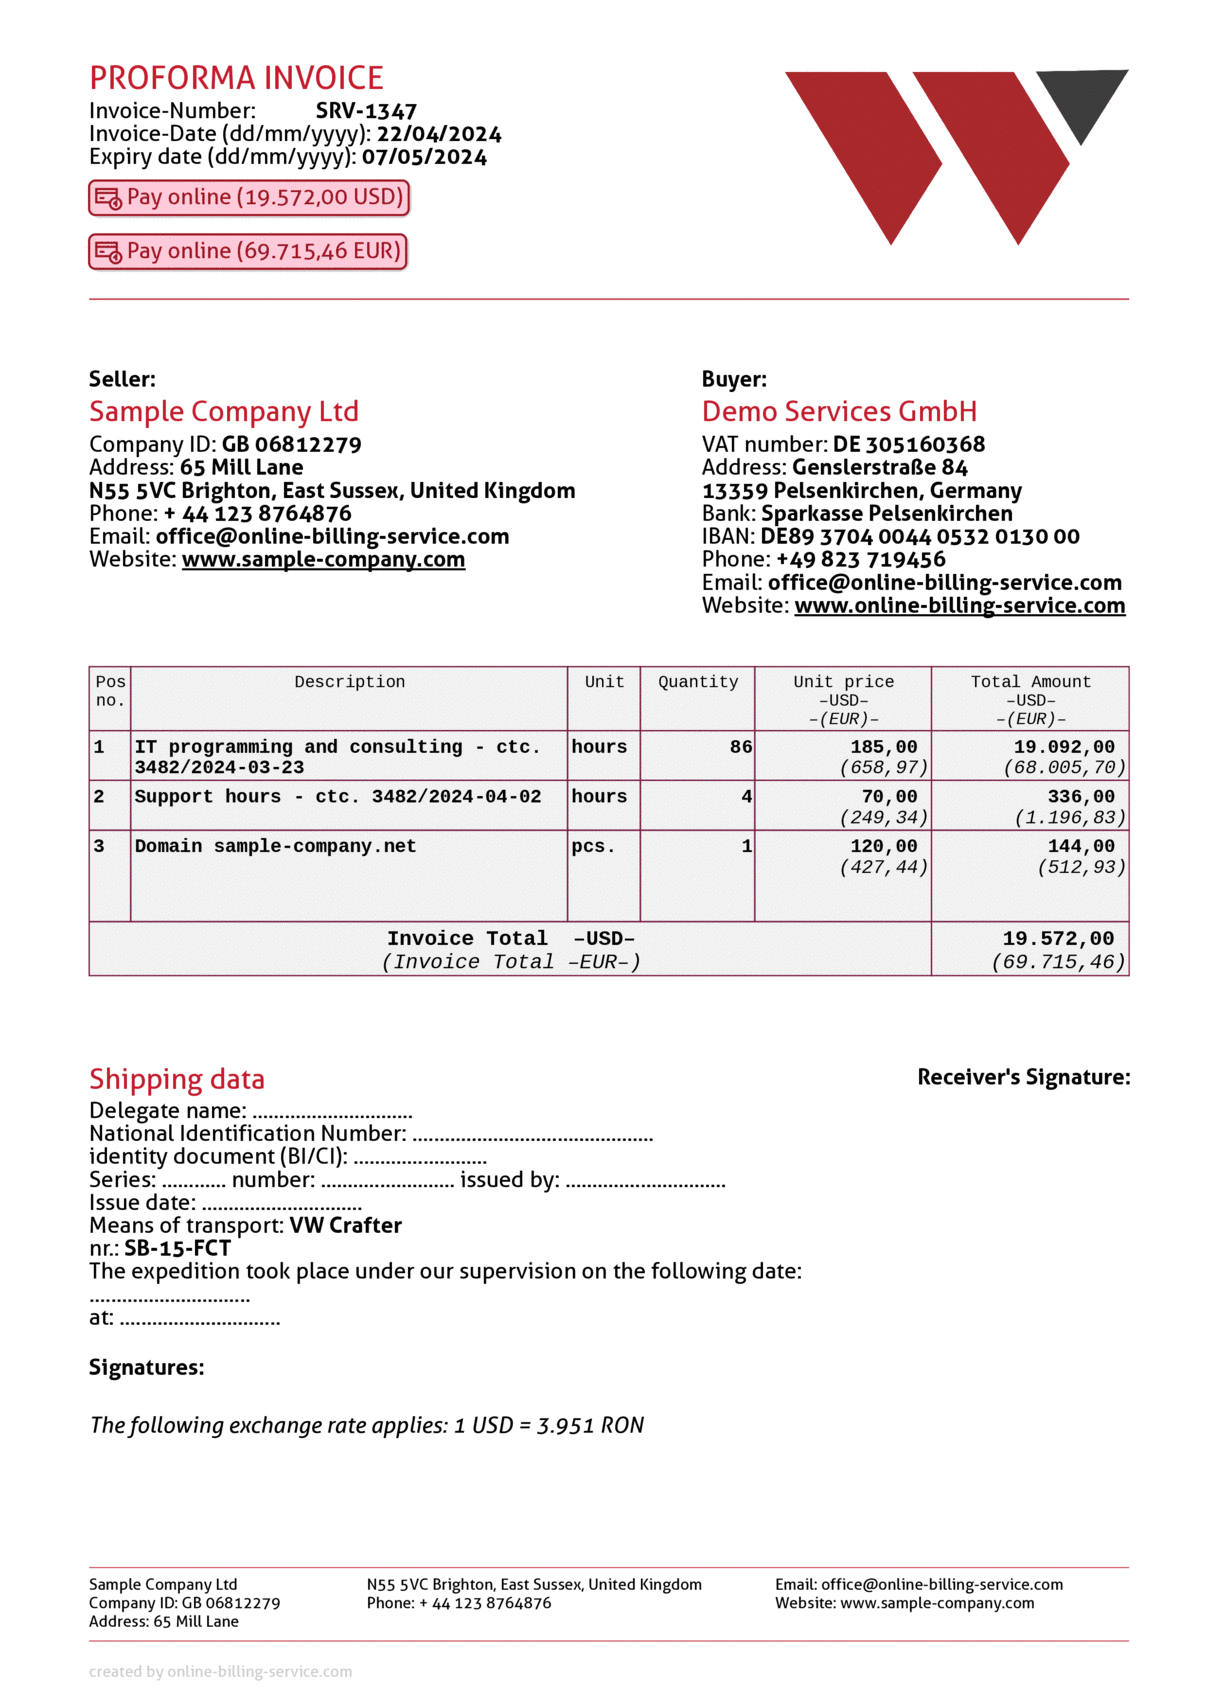 Proforma Invoice without VAT, USD + EUR, English